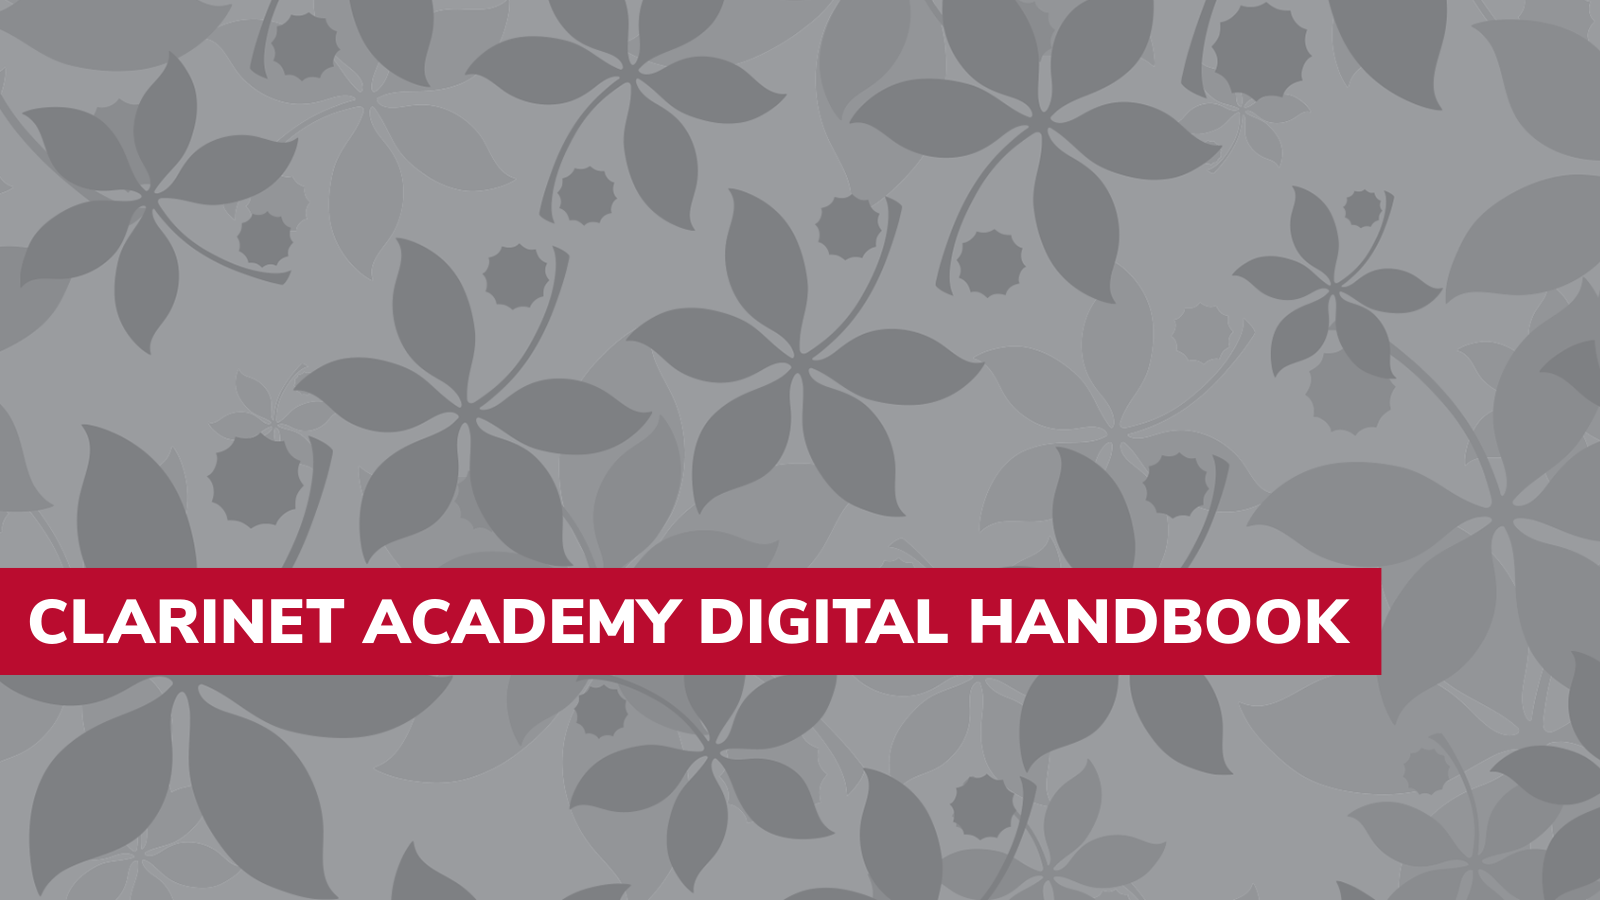 Clarinet Academy Digital Handbook web page